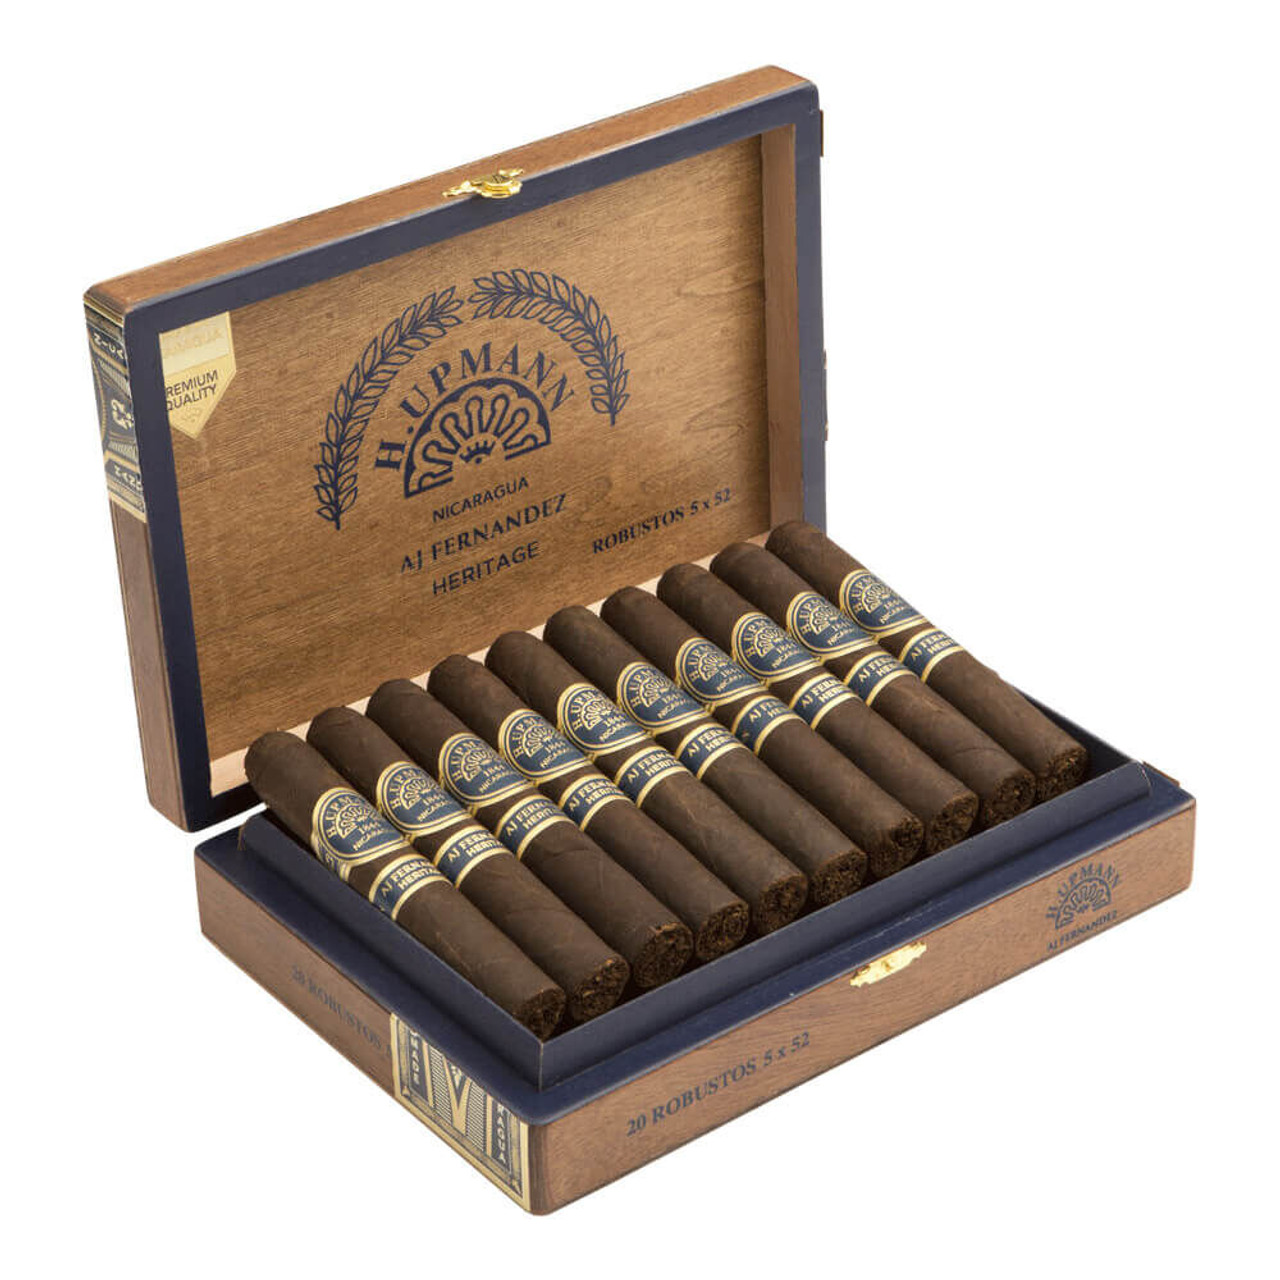 Nicaragua Heritage by AJ Fernandez Robusto Cigars - 5 x 52 (Box of 20) Open